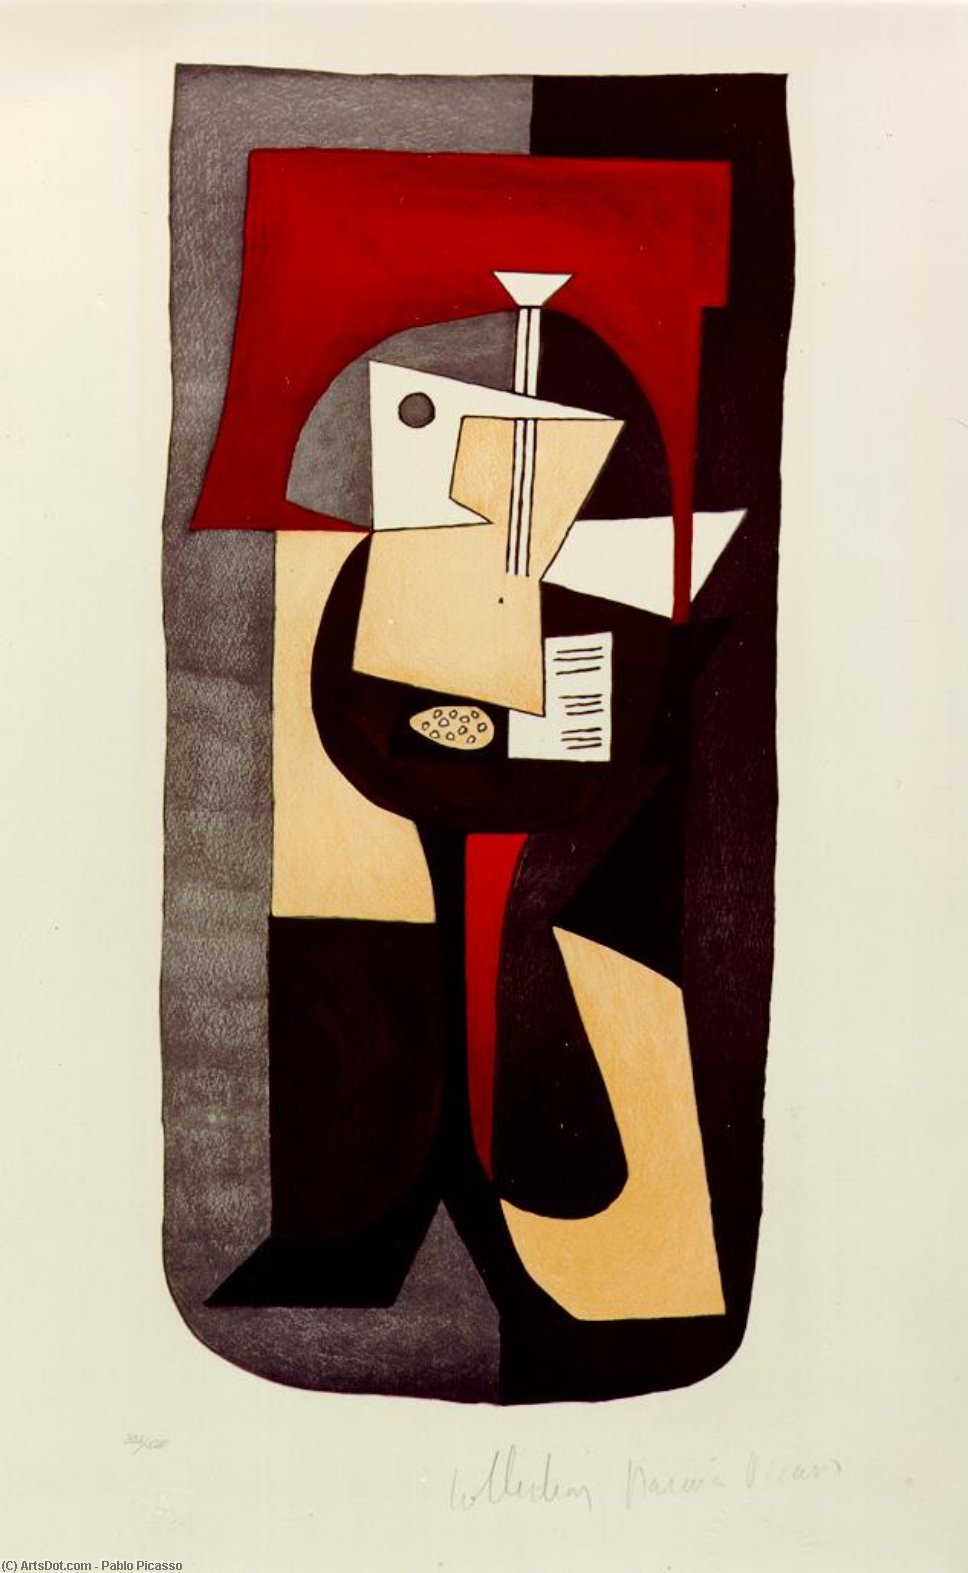 WikiOO.org - אנציקלופדיה לאמנויות יפות - ציור, יצירות אמנות Pablo Picasso - Guitar on pedestal